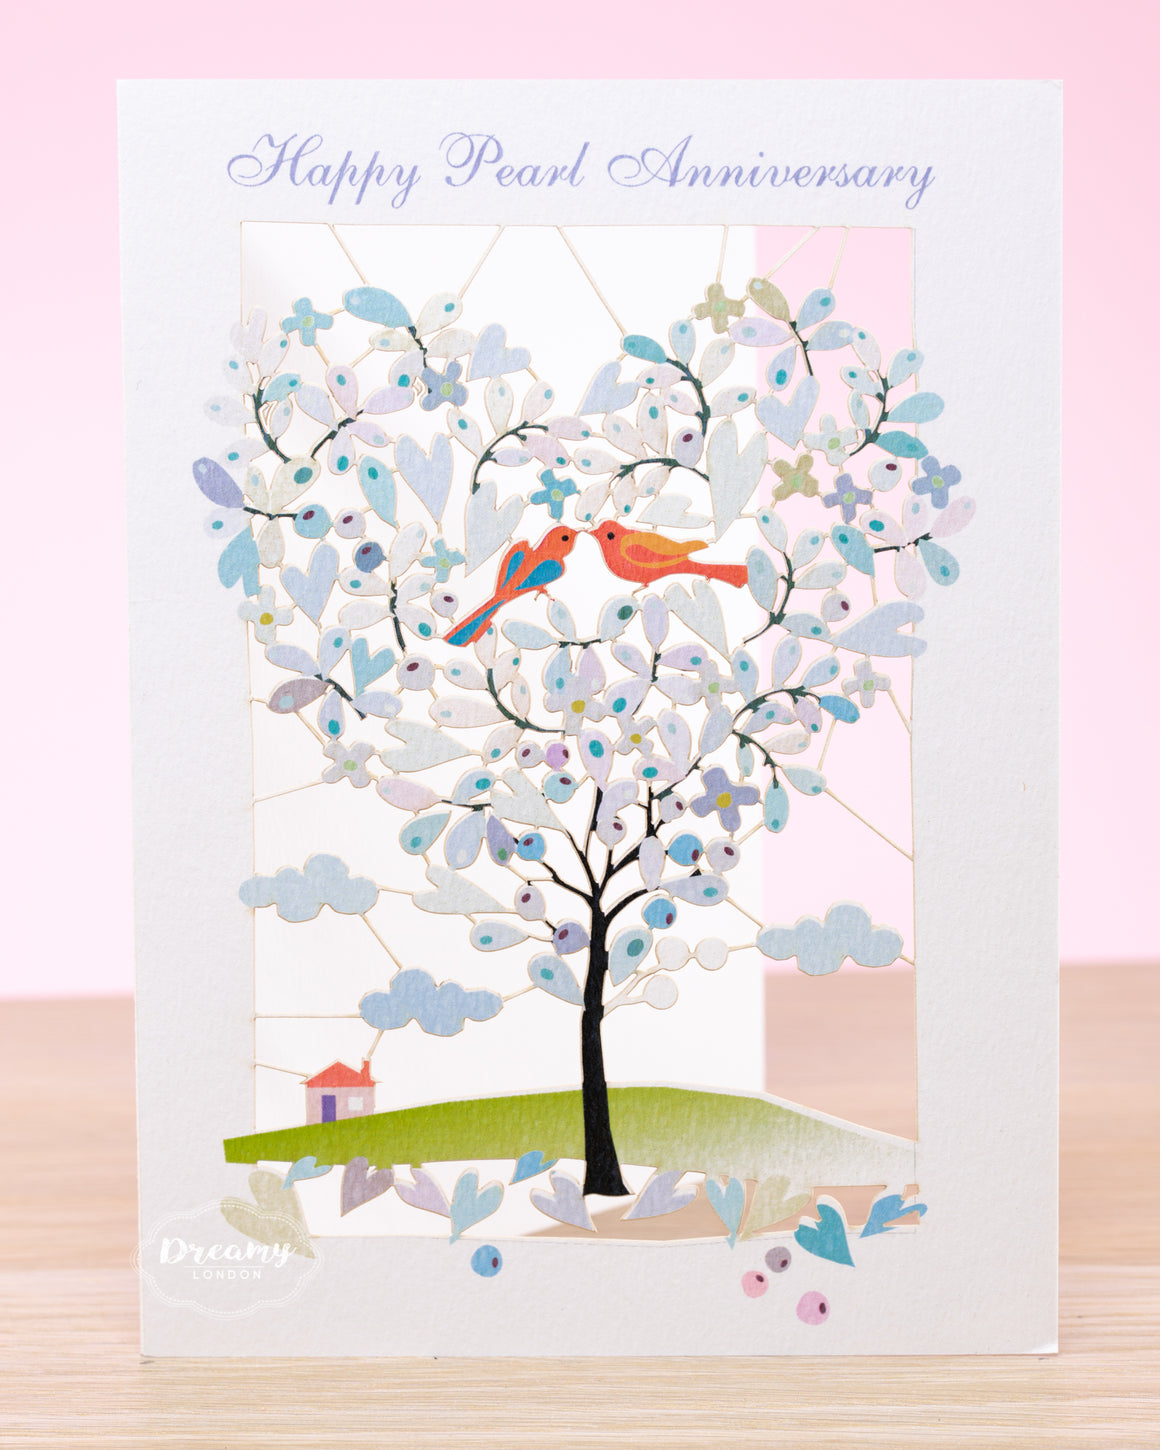 Happy Pearl Anniversary Card - dreamylondon